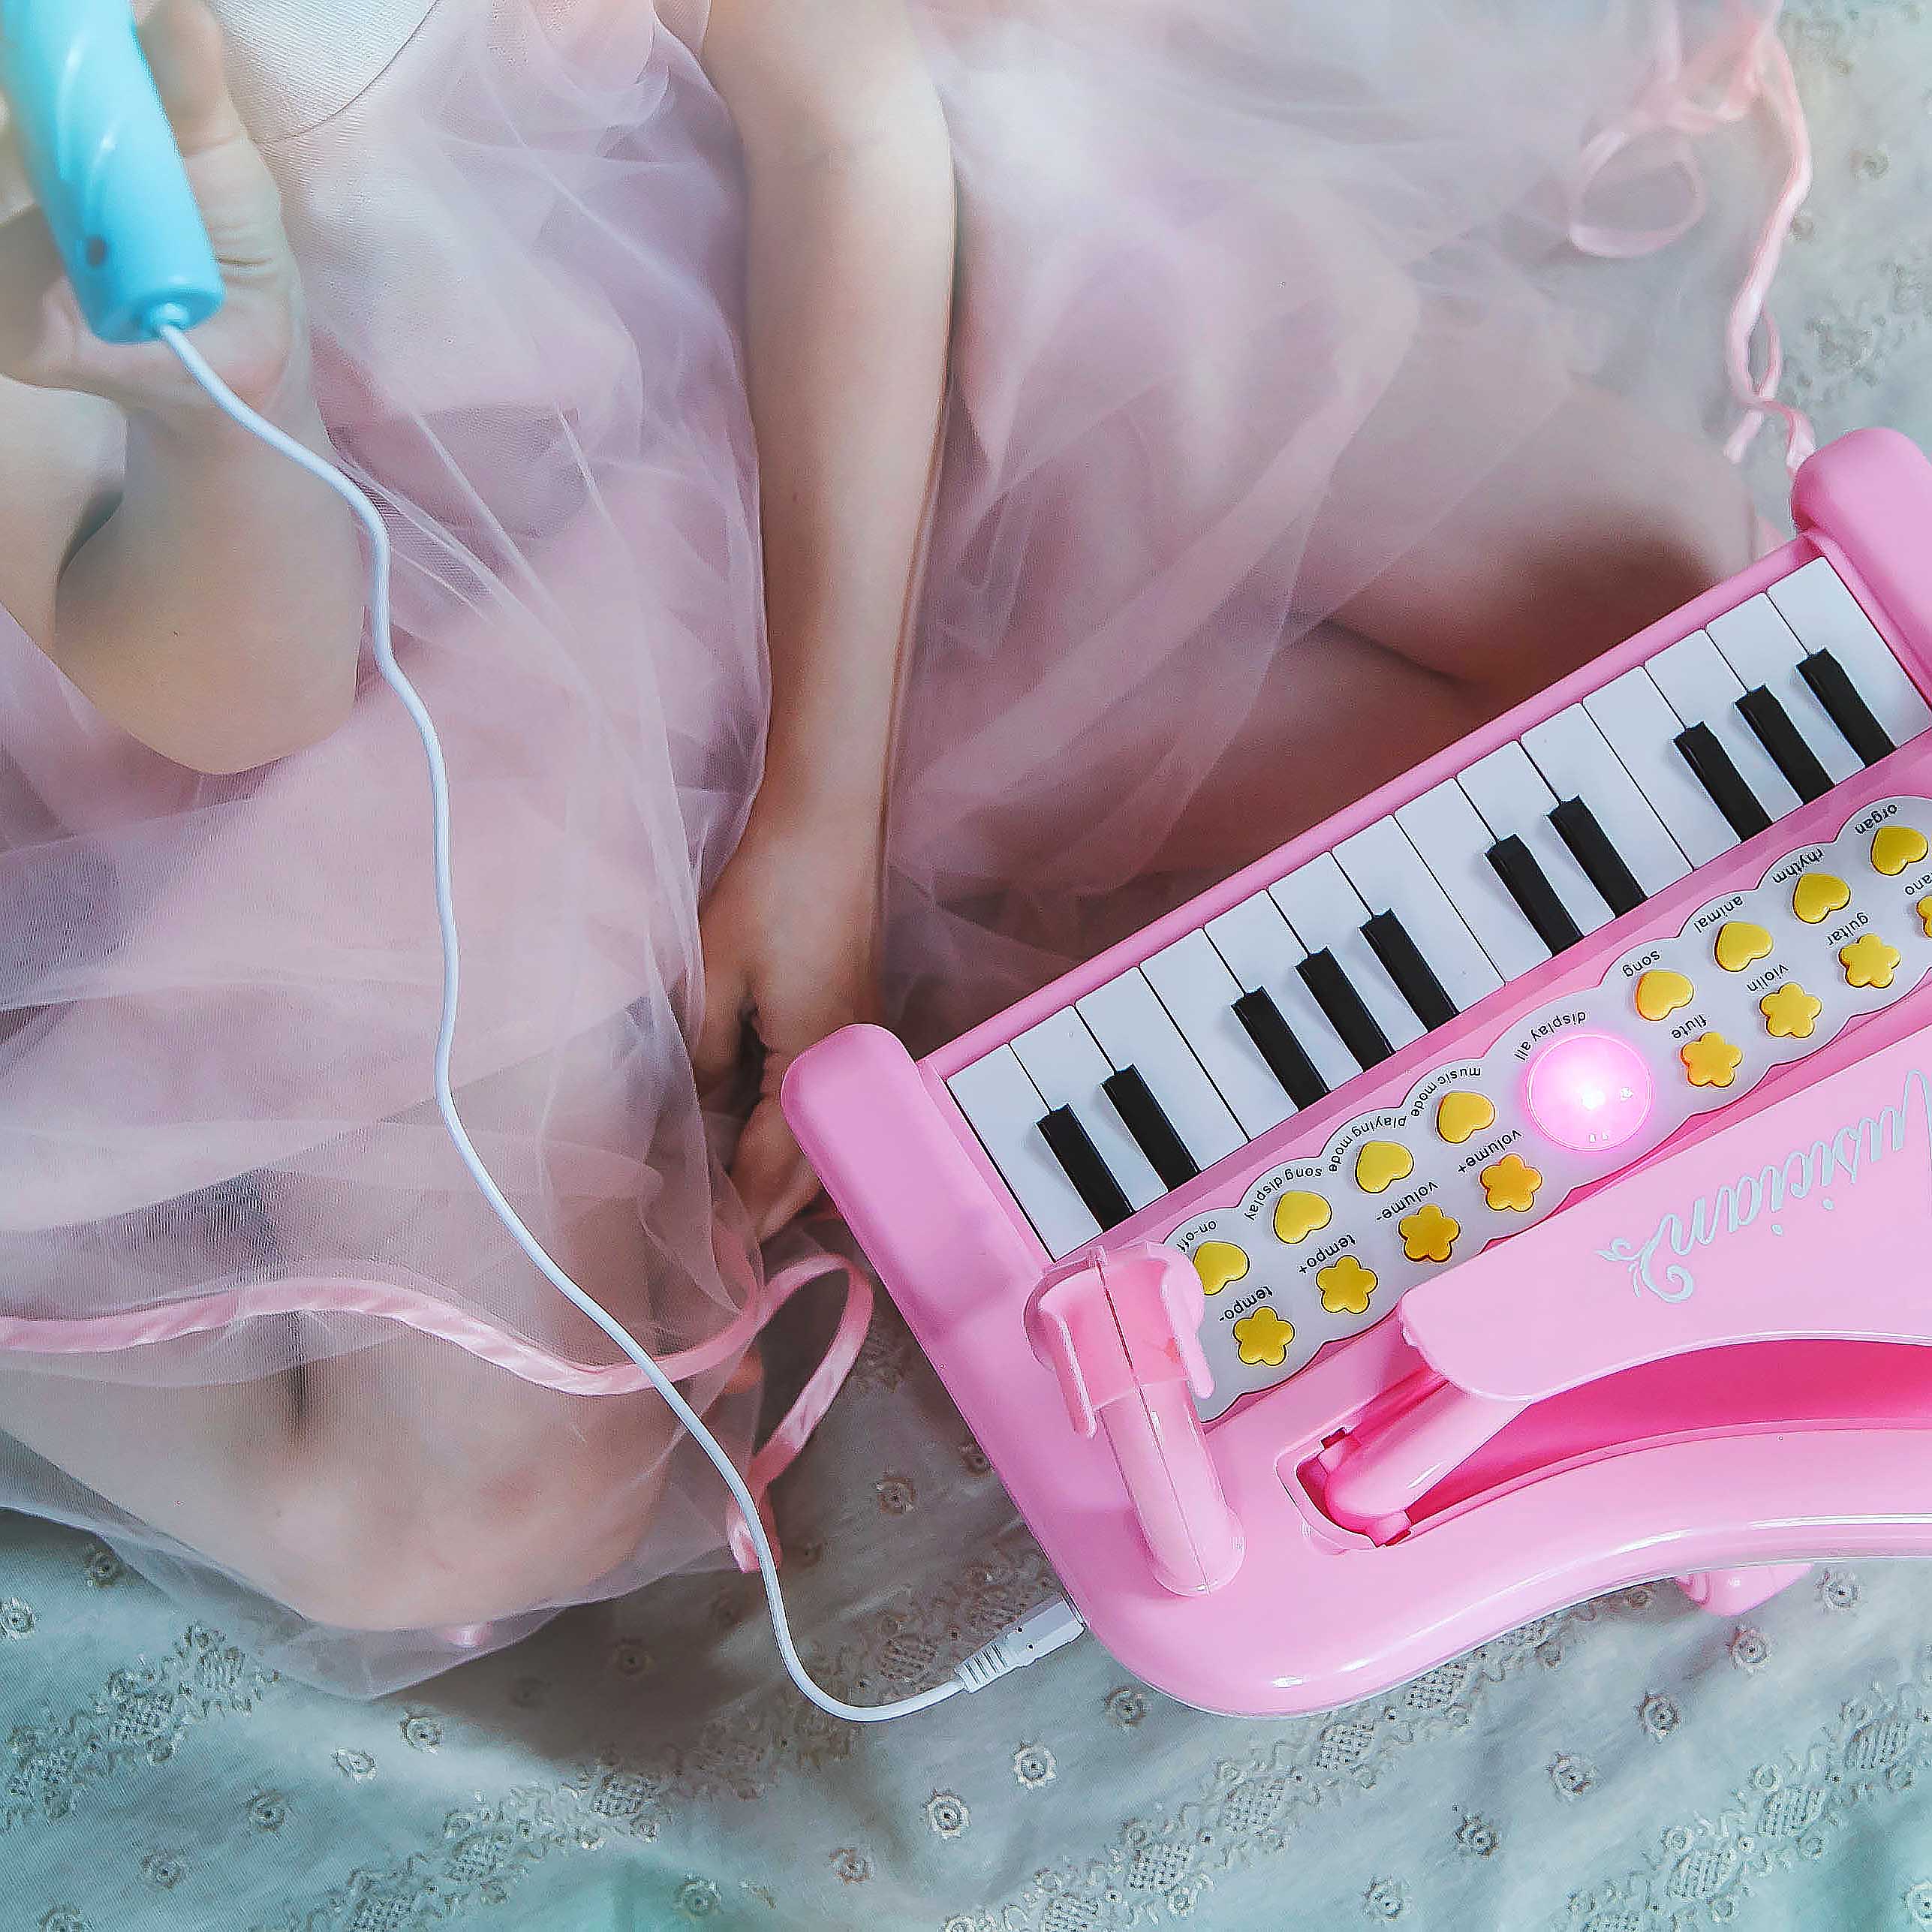 Musikalske klaverinstrumenter mikrofon tastatur til kid lyd lyser børn fra 1 to 3 batteri baby spædbarn småbørnspiger